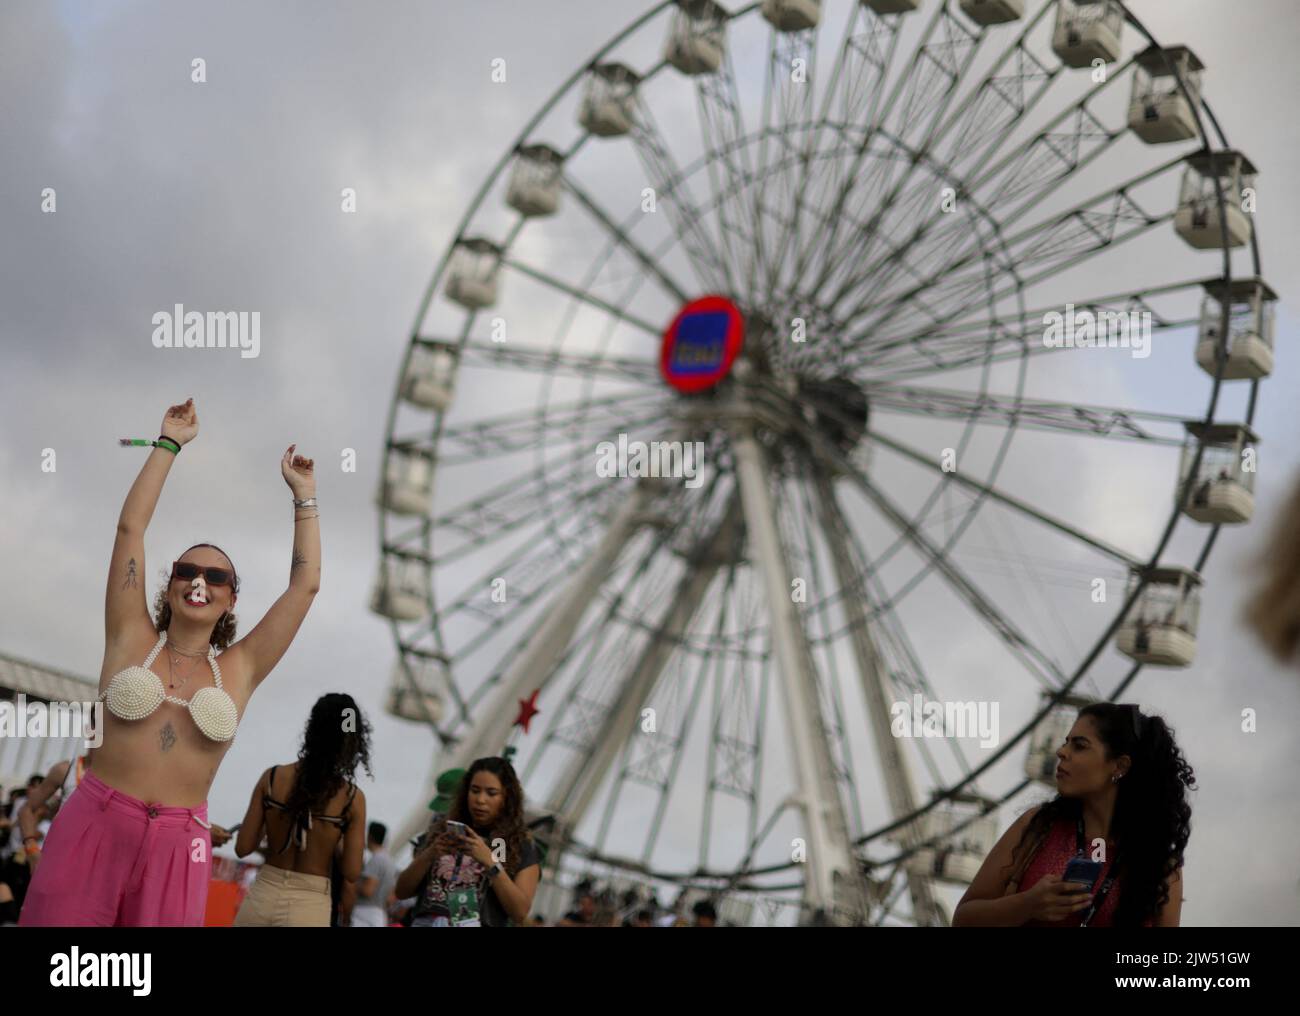 Fans attend the Rock in Rio music festival in Rio de Janeiro, Brazil September 3, 2022. REUTERS/Pilar Olivares Stock Photo